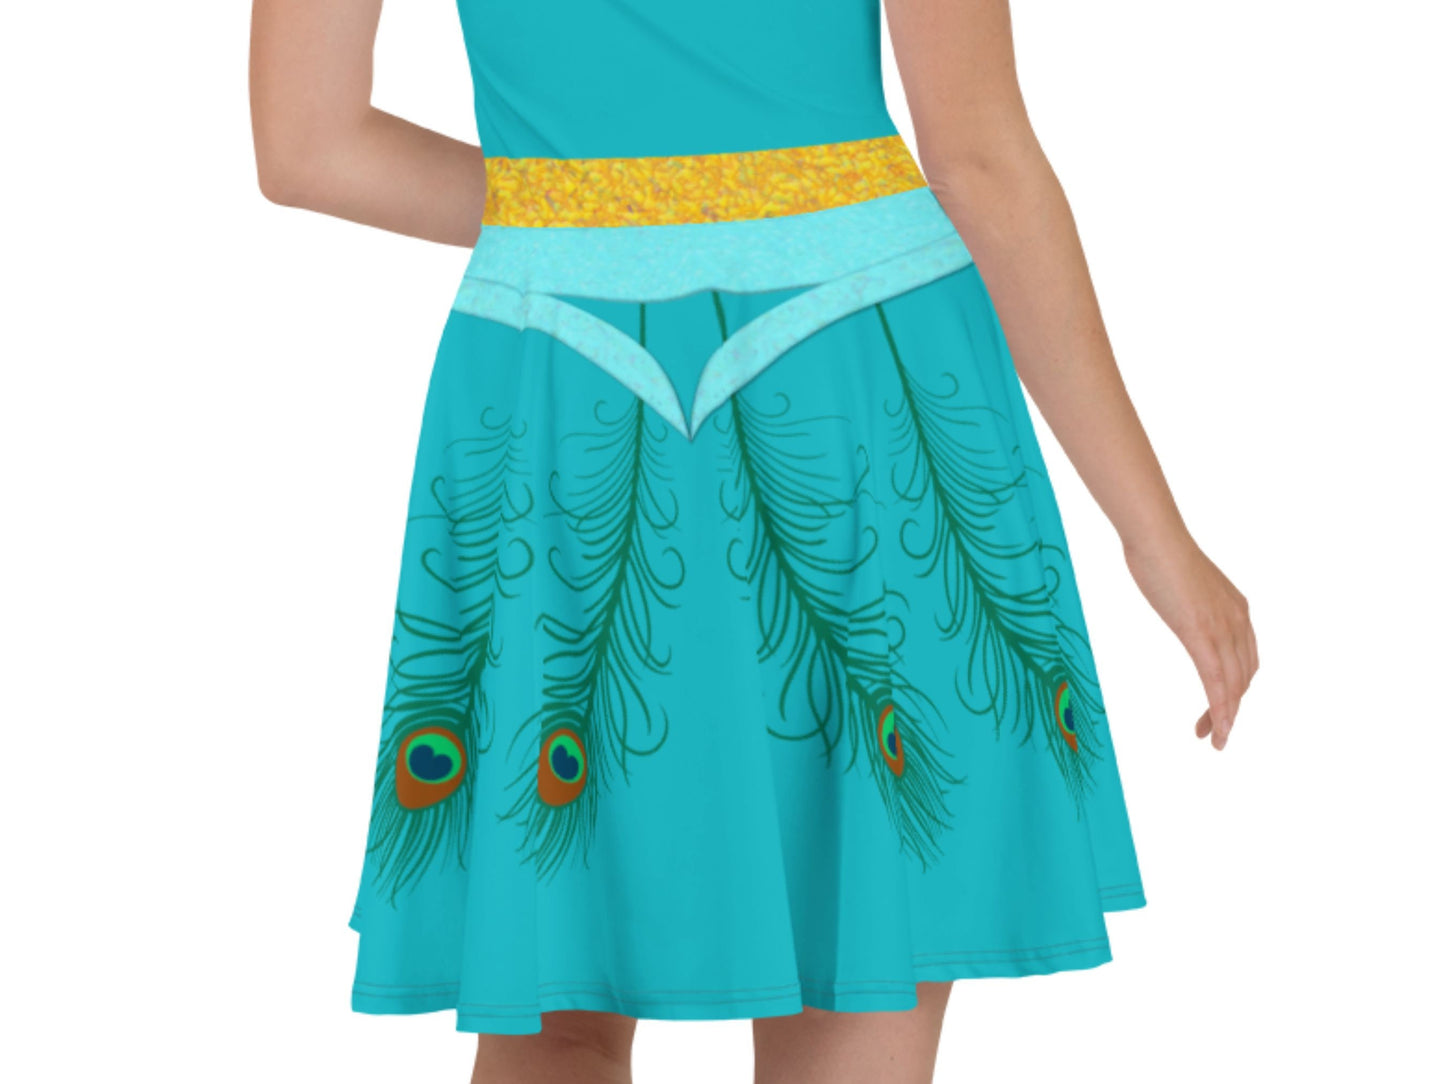 Jasmine Princess Inspired Skater Dress & Skirt Aladdin Halloween Cosplay Gift for Her Birthday Gift Magic Carpet Toy Running Costume Bound